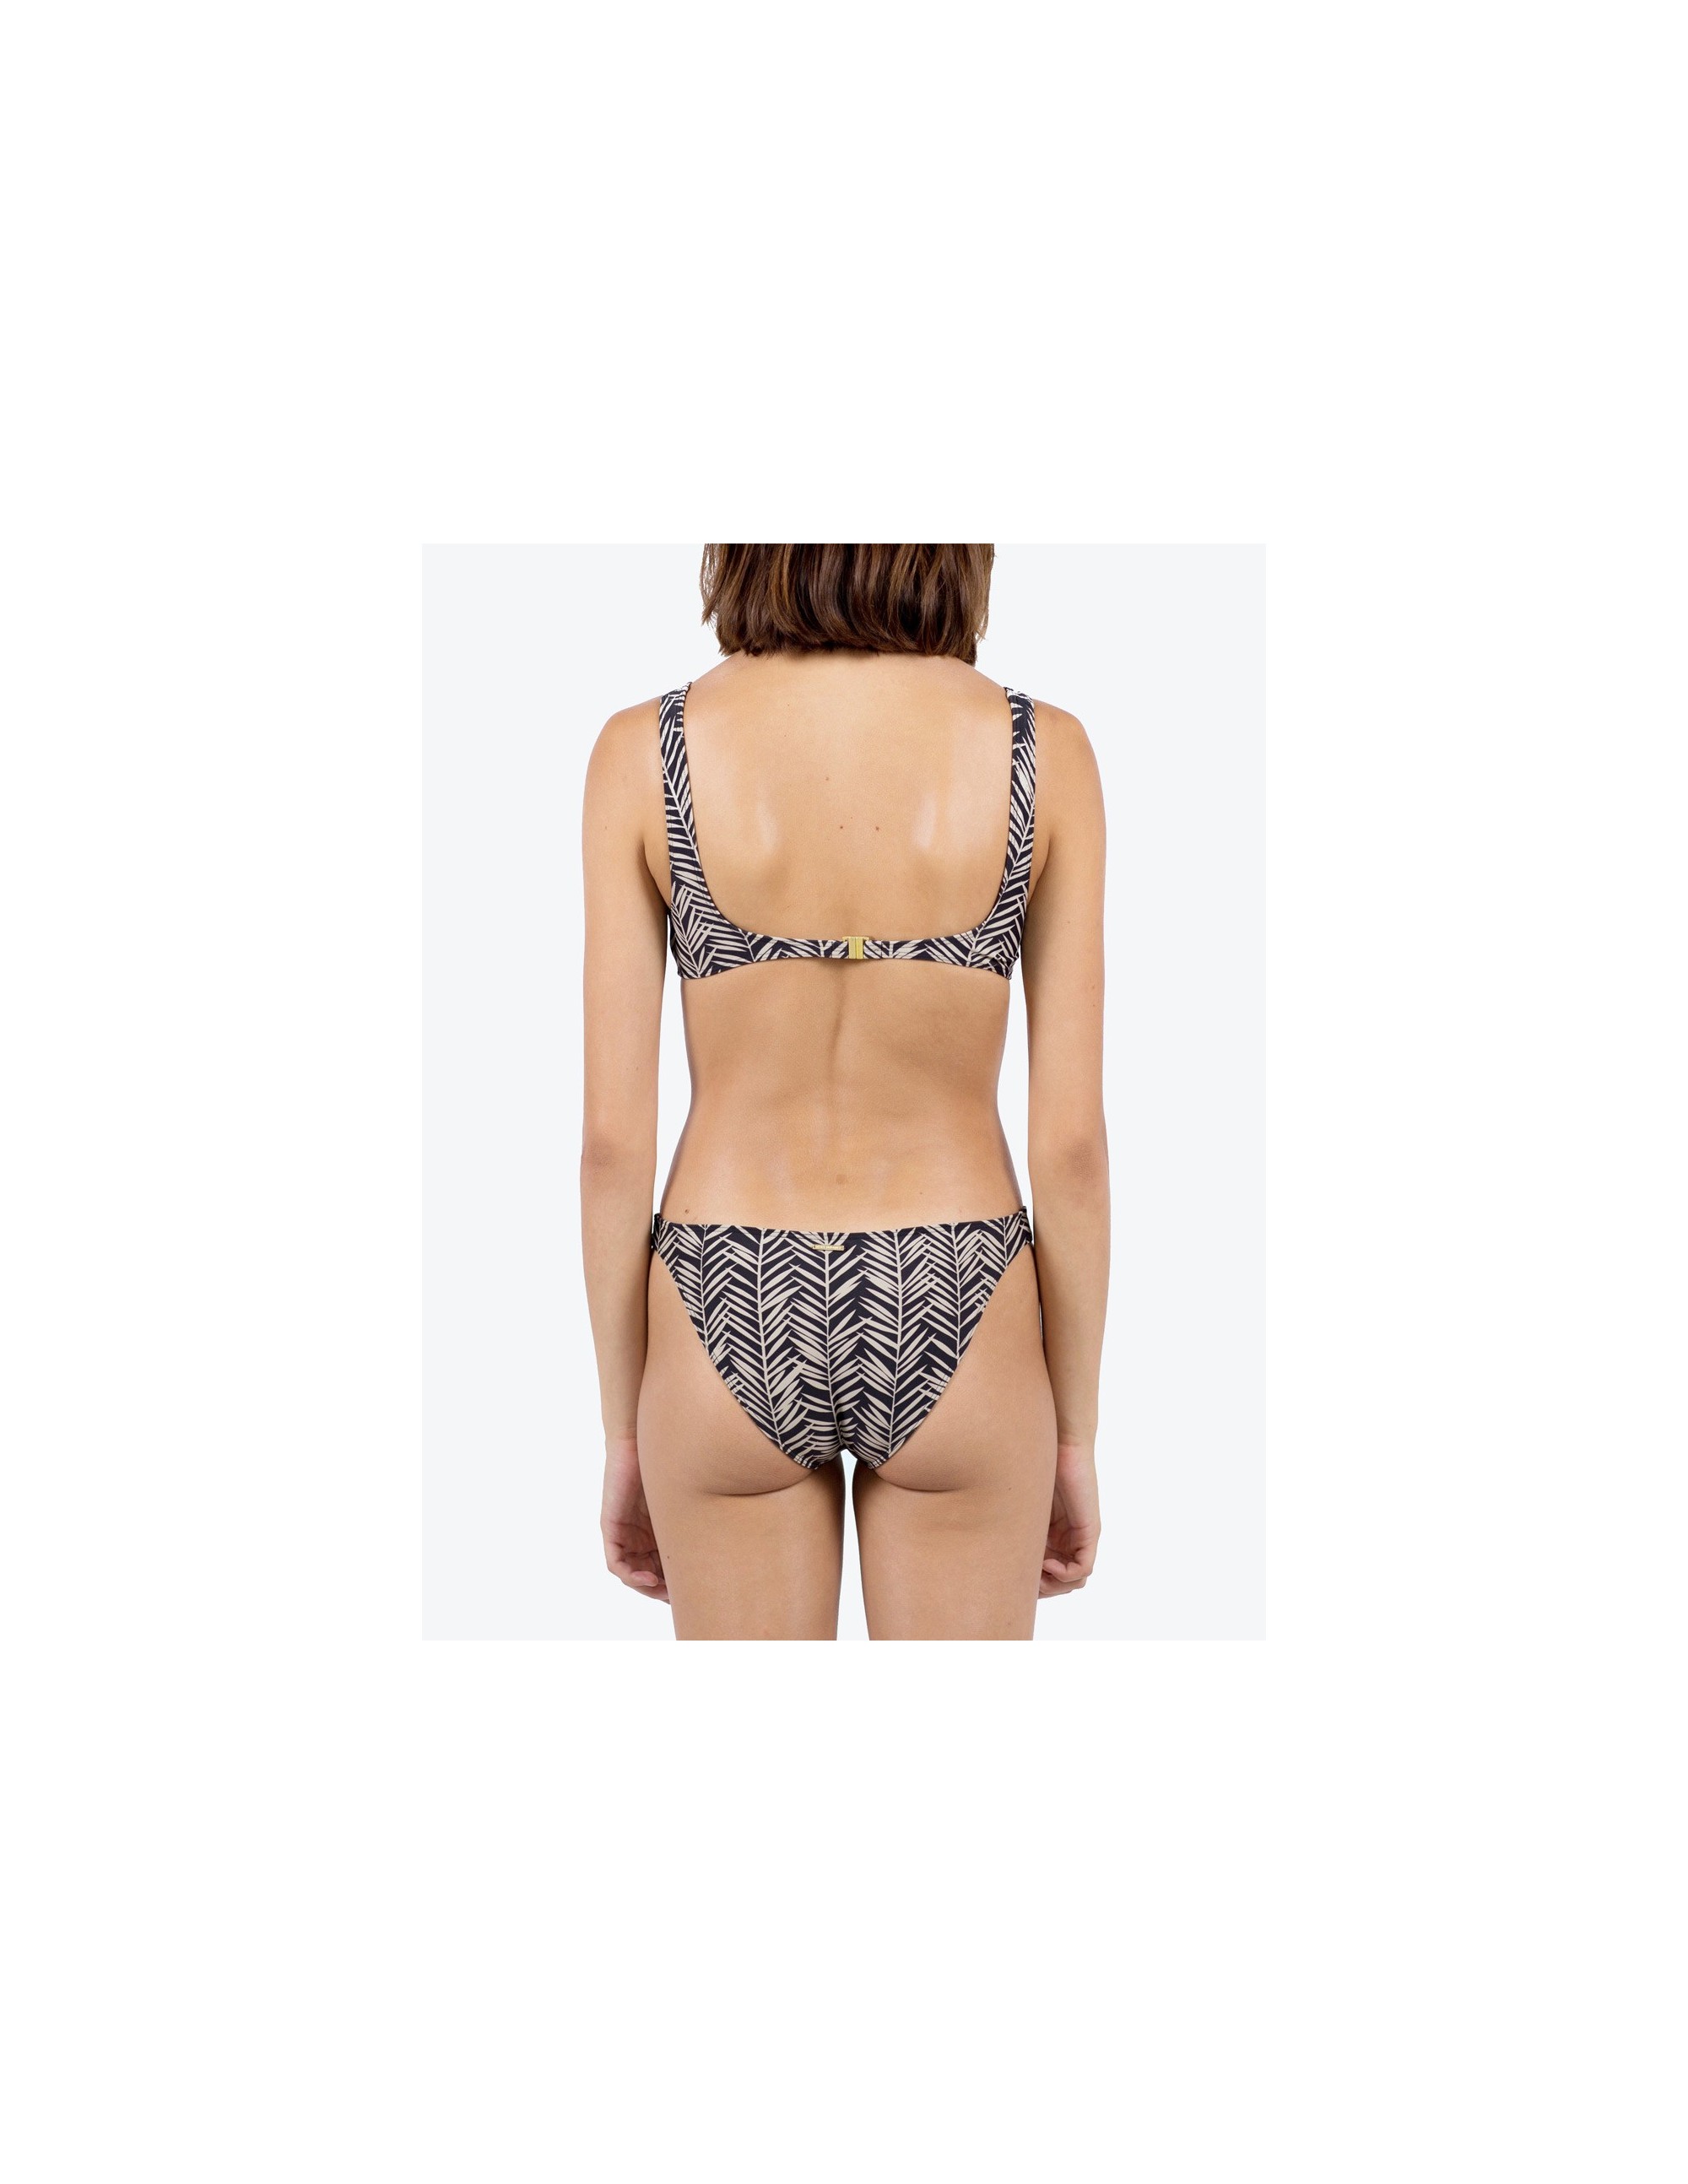 PARAISO bikini bottom - TROPICAL BREEZE